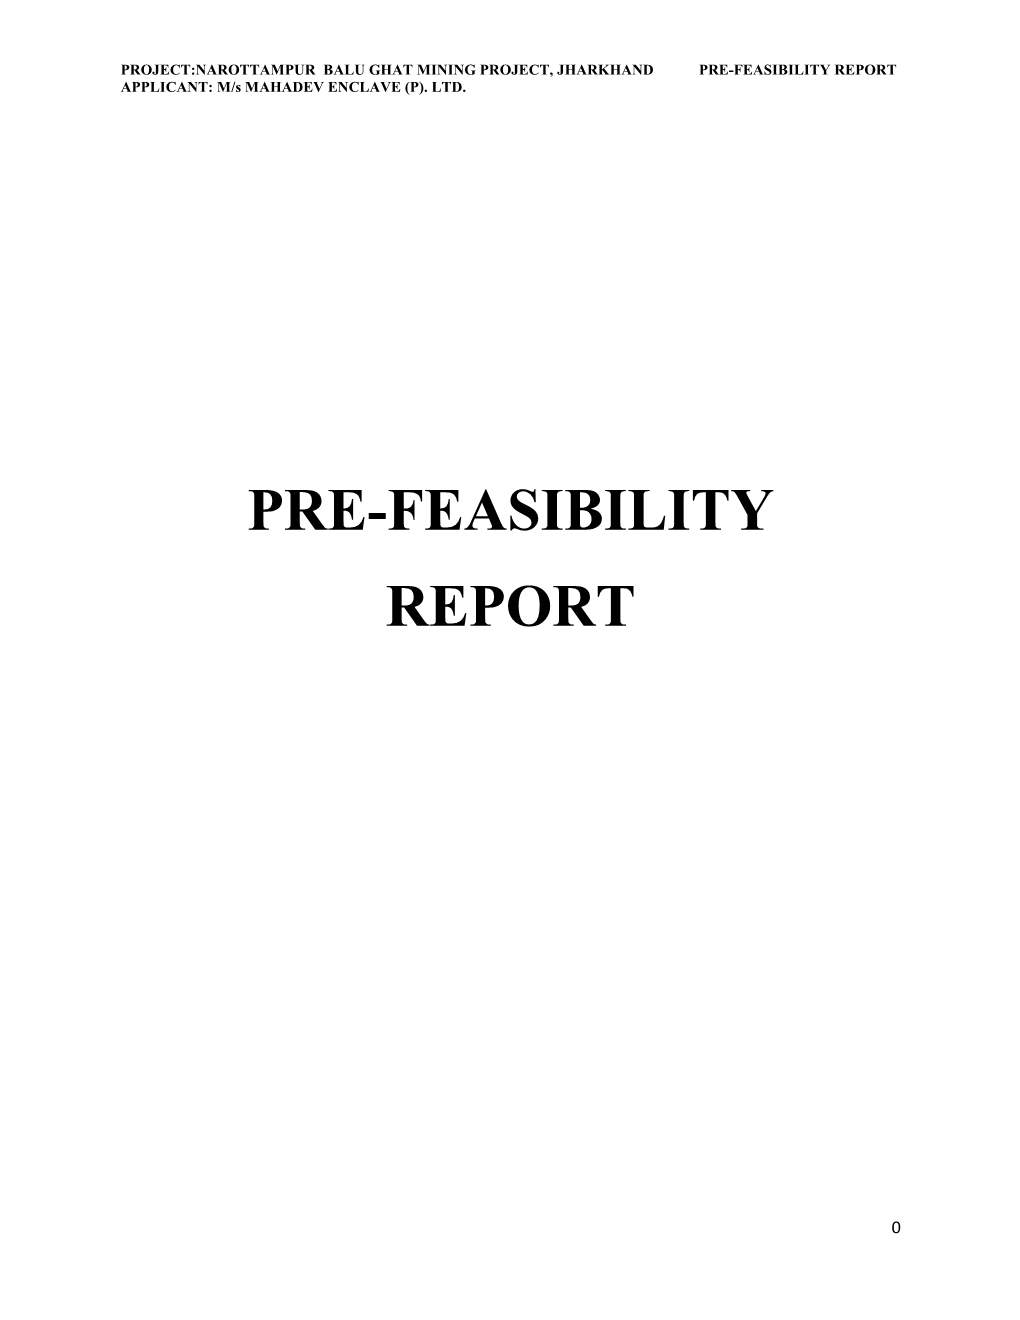 PRE-FEASIBILITY REPORT APPLICANT: M/S MAHADEV ENCLAVE (P)